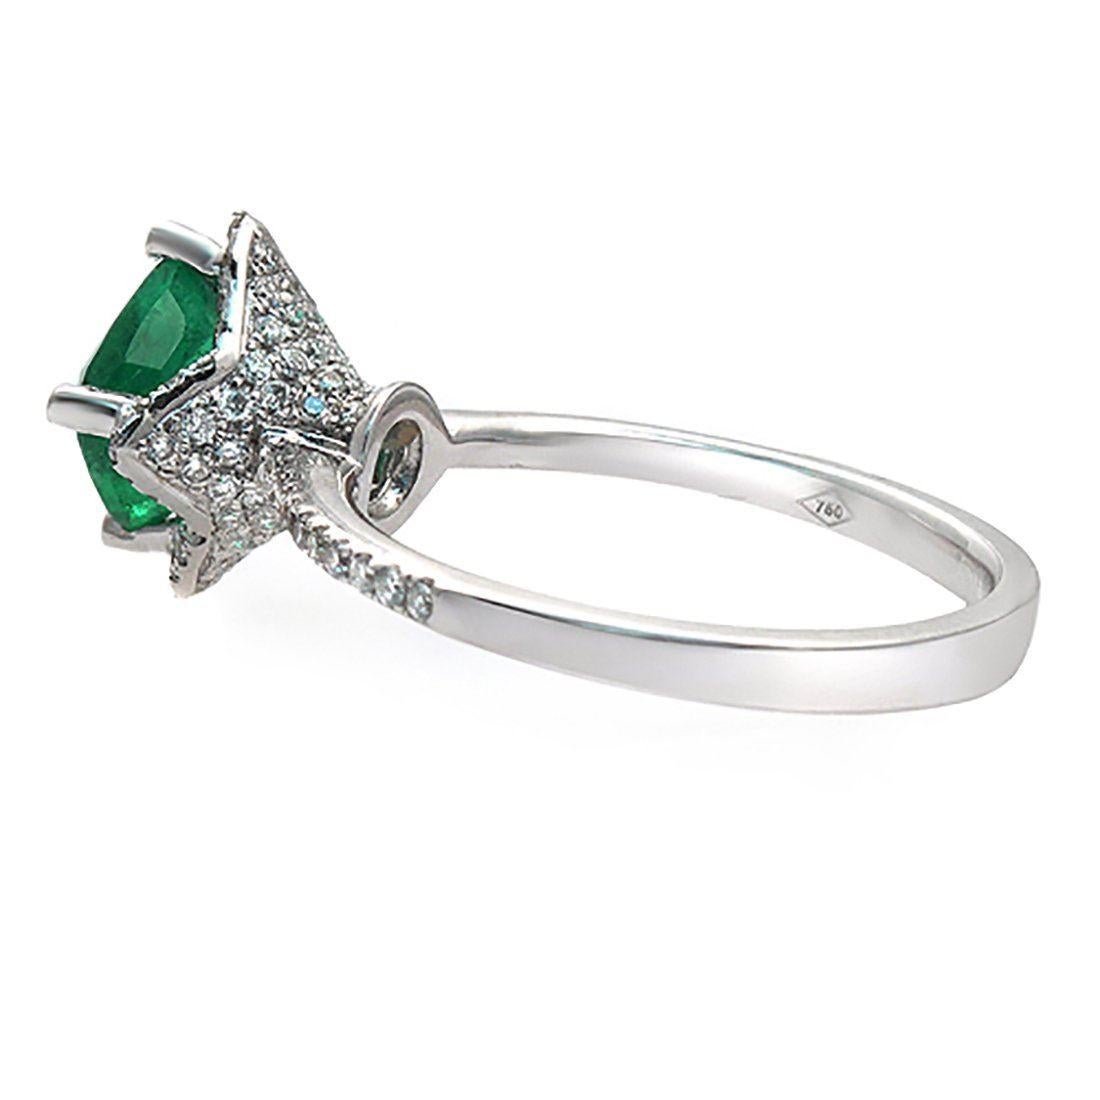 1.31 Carat Zambian Emerald and 0.46 Carat Diamonds in 18 Karat Gold Ring For Sale 4